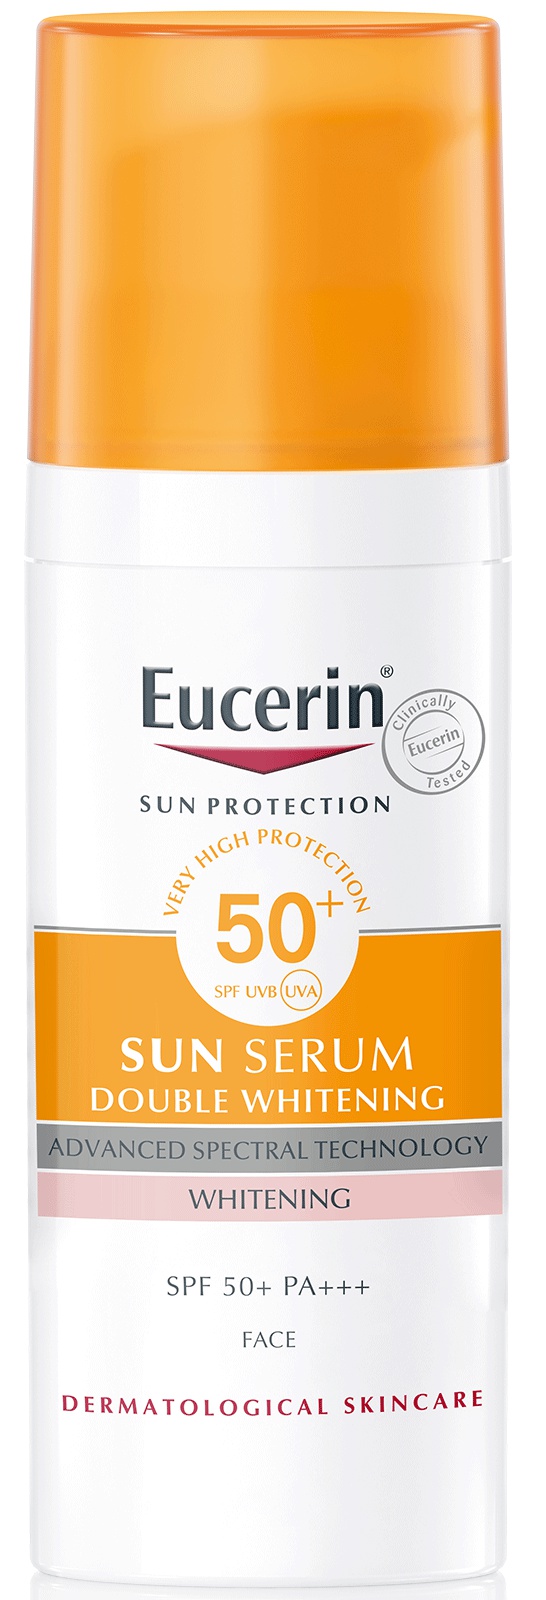 Eucerin Sun Serum Double Whitening SPF50+ Pa+++